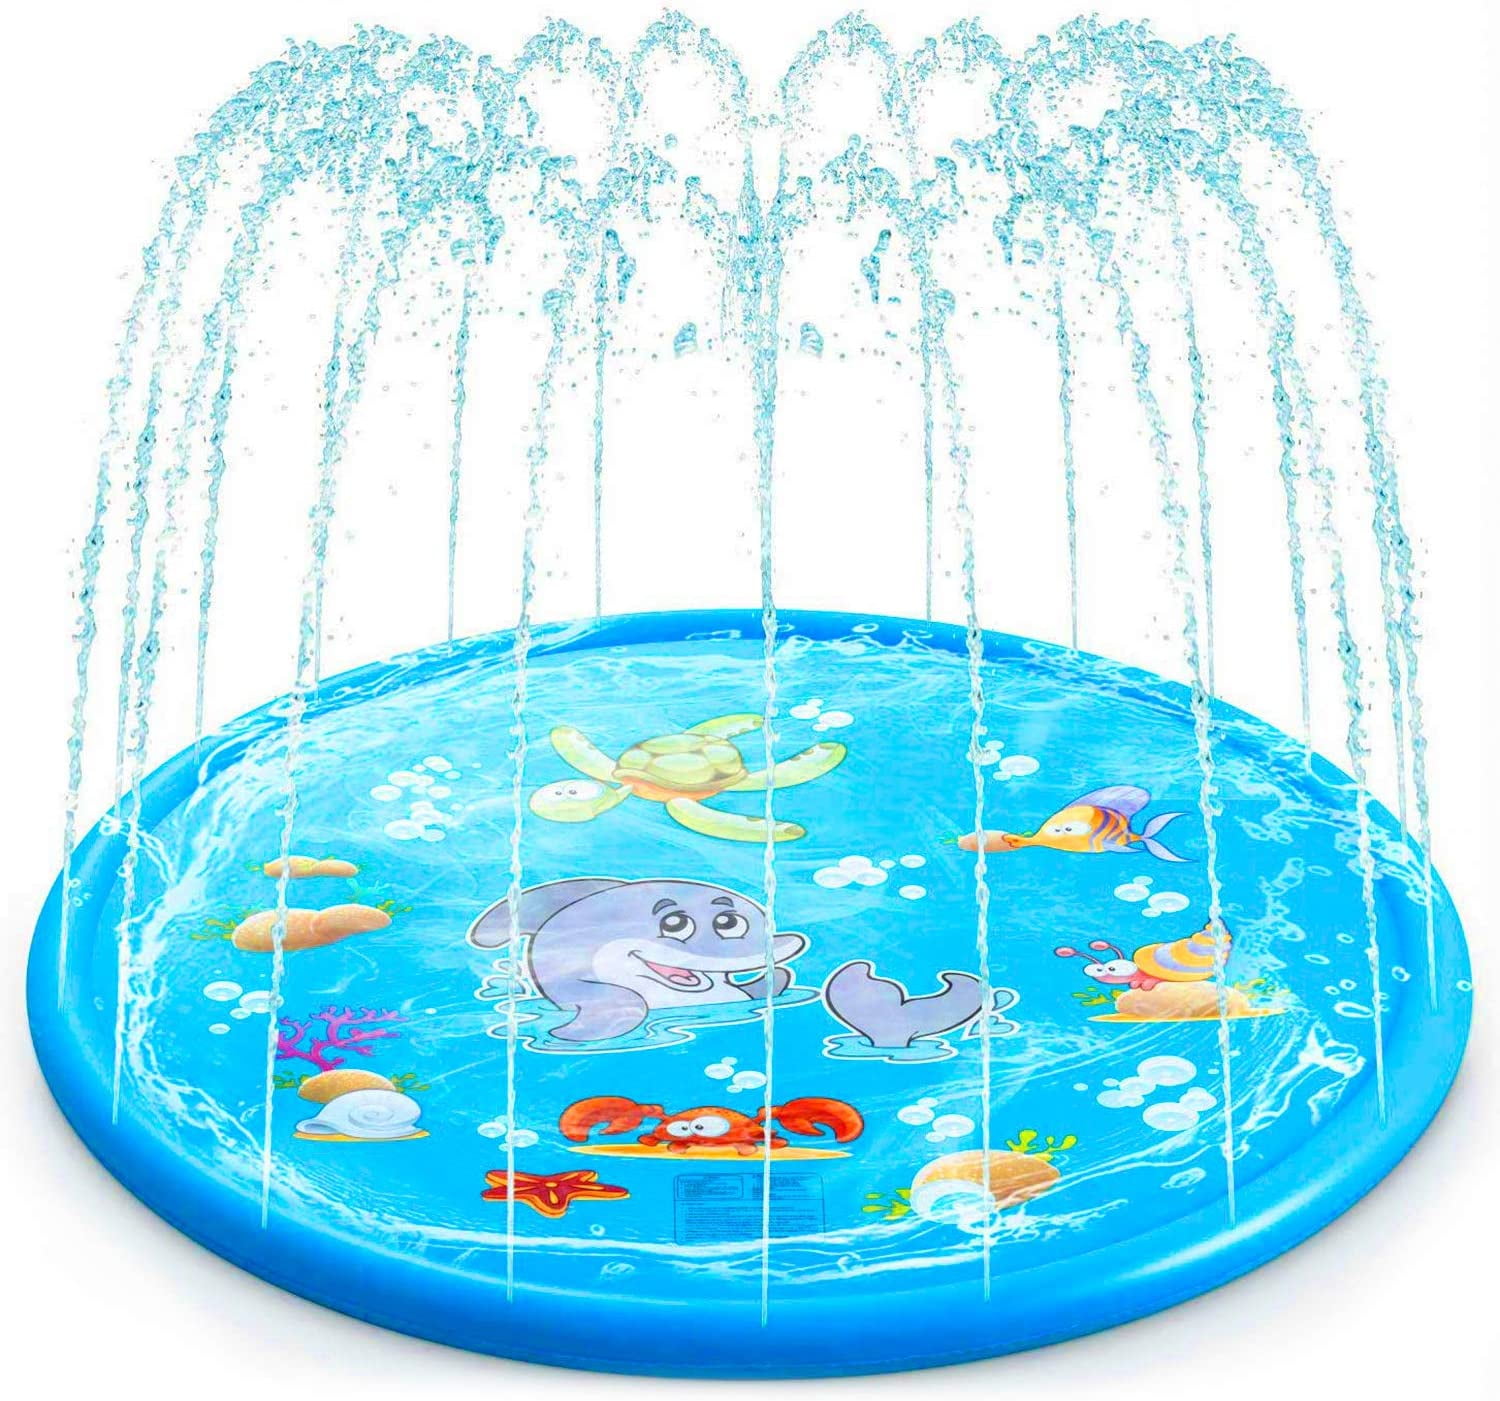 Aitey Sprinkle & Splash Play Mat 68 Sprinkler Pad Inflatable Outdoor Water Toys for Kids Babies Toddlers Boys Girls